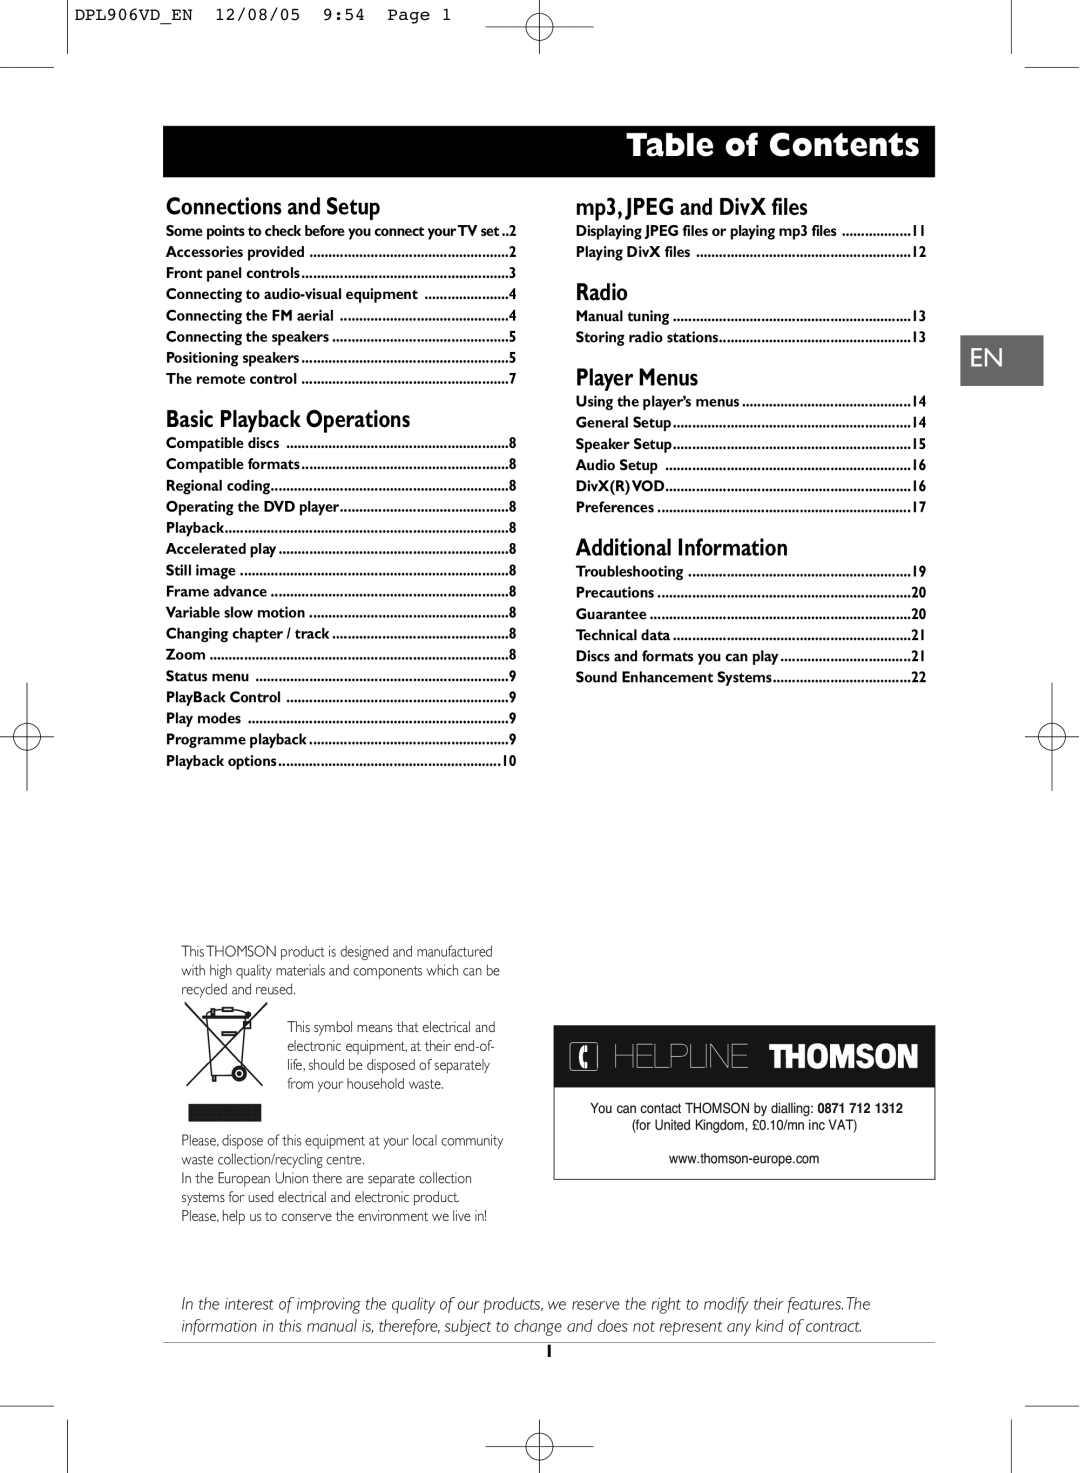 Technicolor - Thomson DPL906VD_EN manual Table of Contents, Helpline, mp3, JPEG and DivX files 